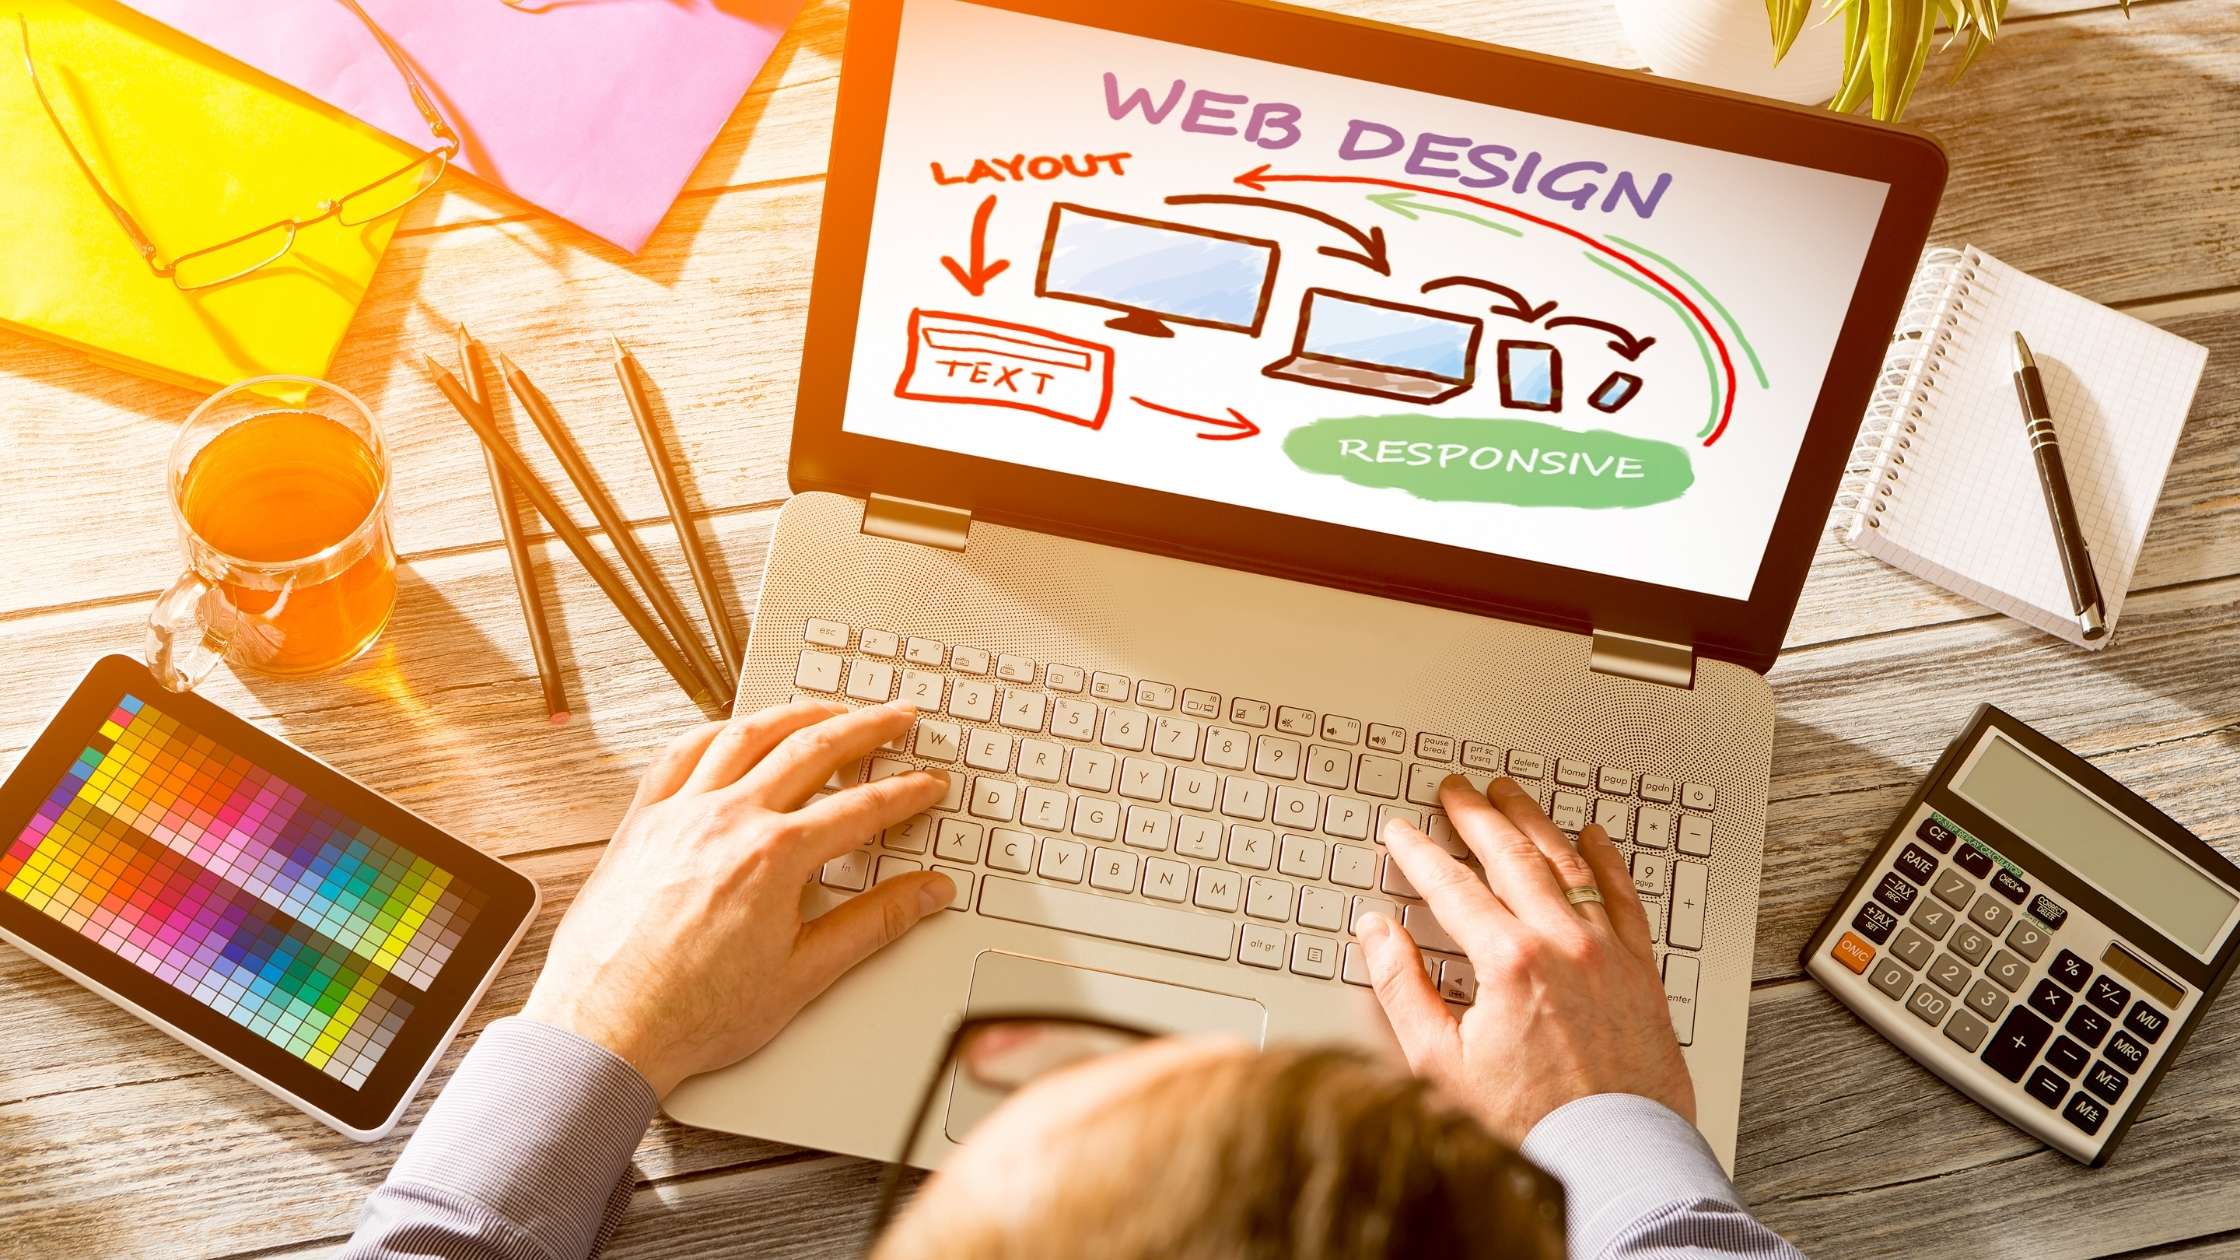 hire-a-web-designer